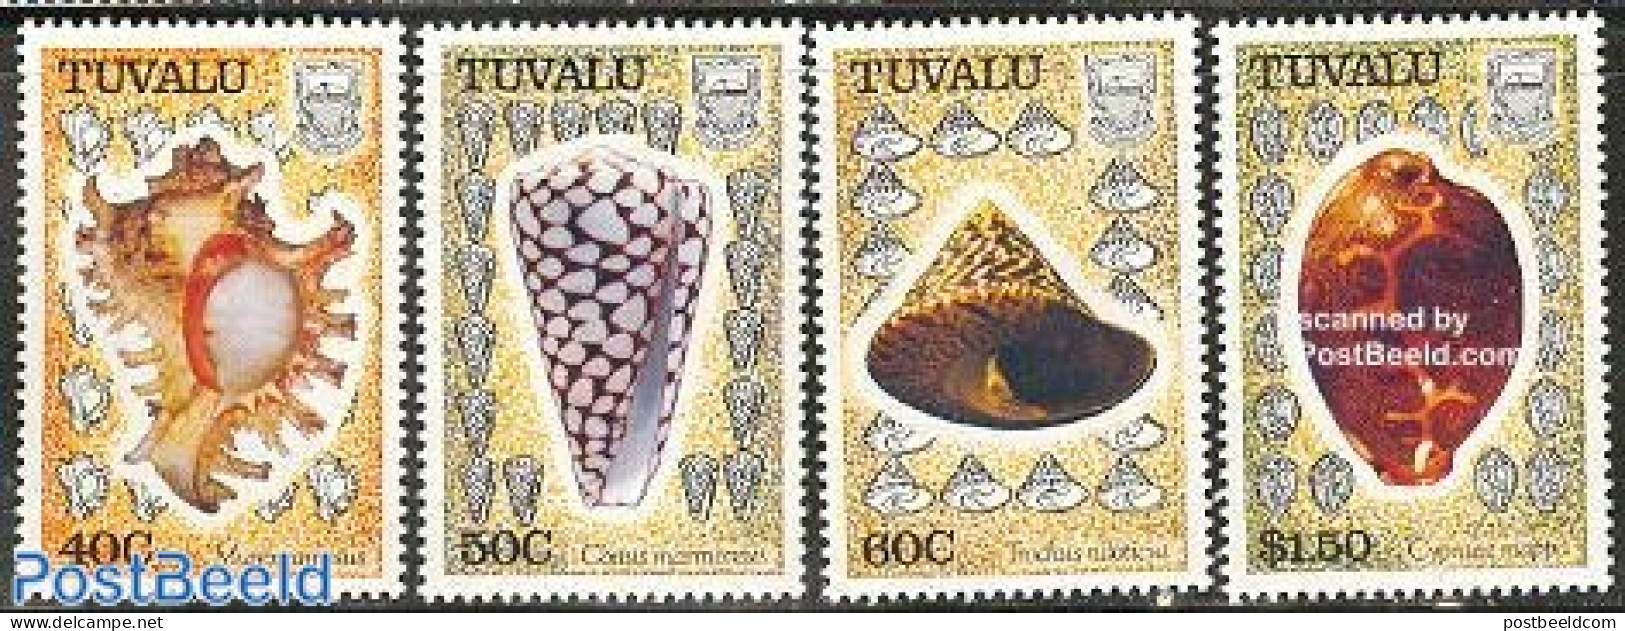 Tuvalu 1991 Shells 4v, Mint NH, Nature - Shells & Crustaceans - Maritiem Leven